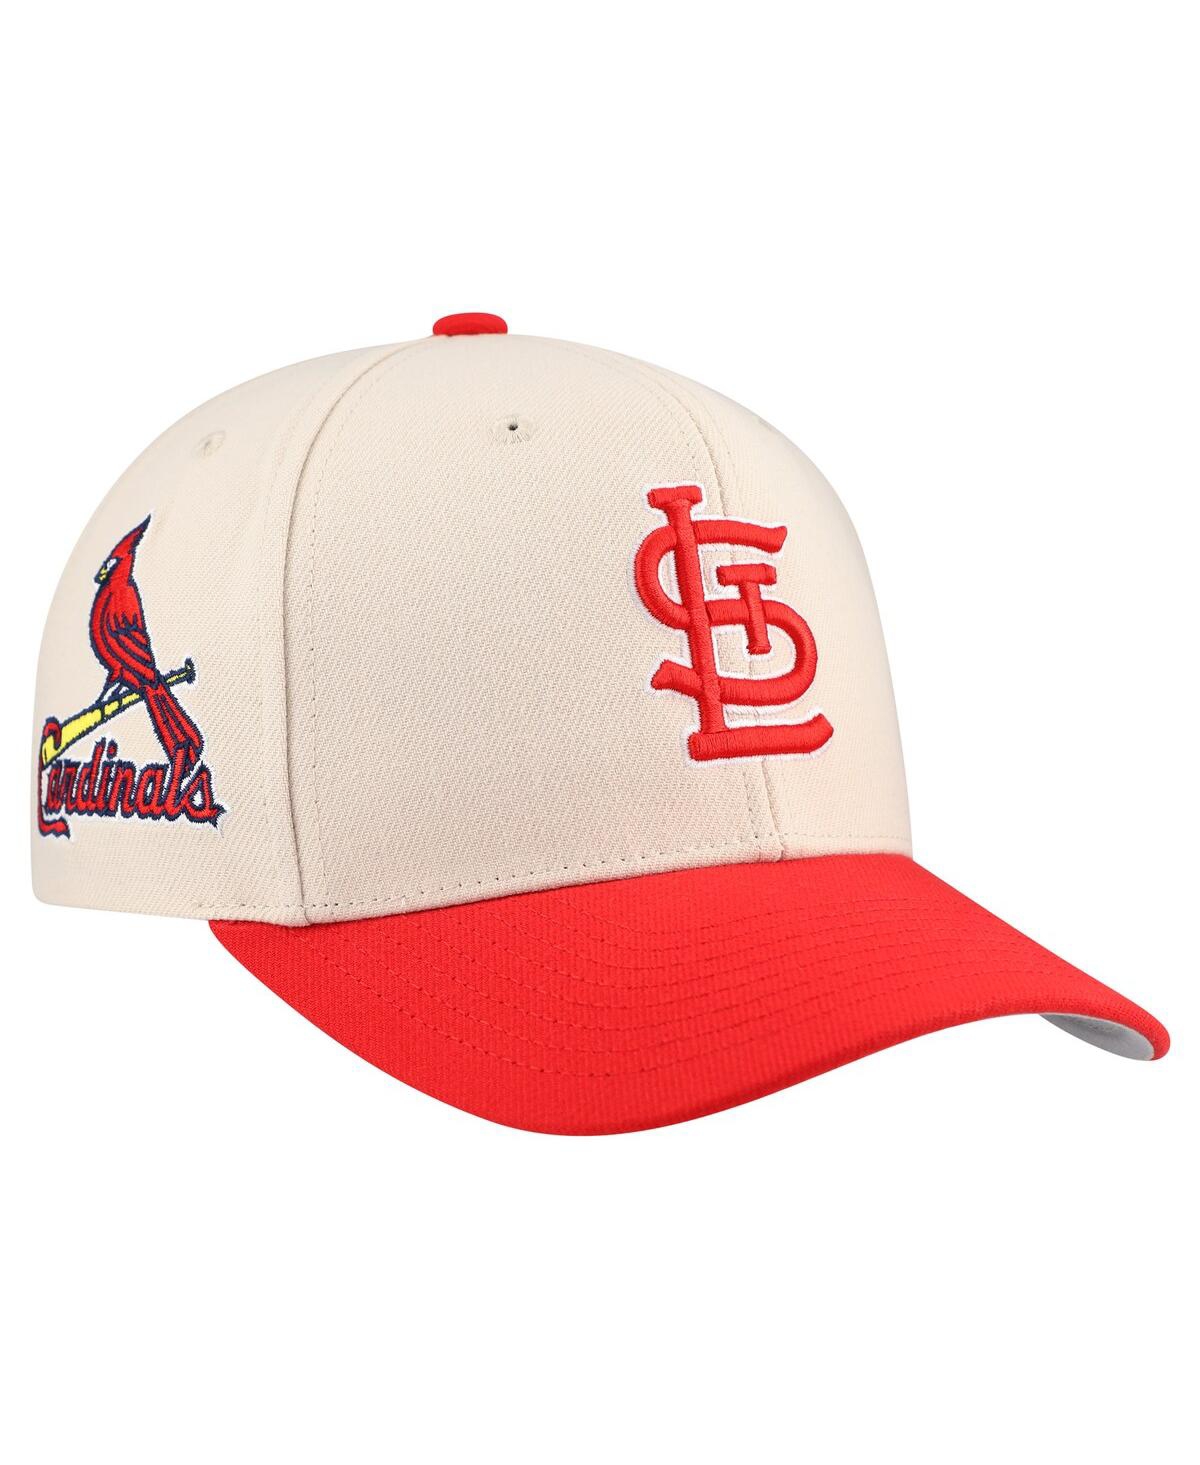 Men's Cream St. Louis Cardinals Pro Crown Adjustable Hat - Cream